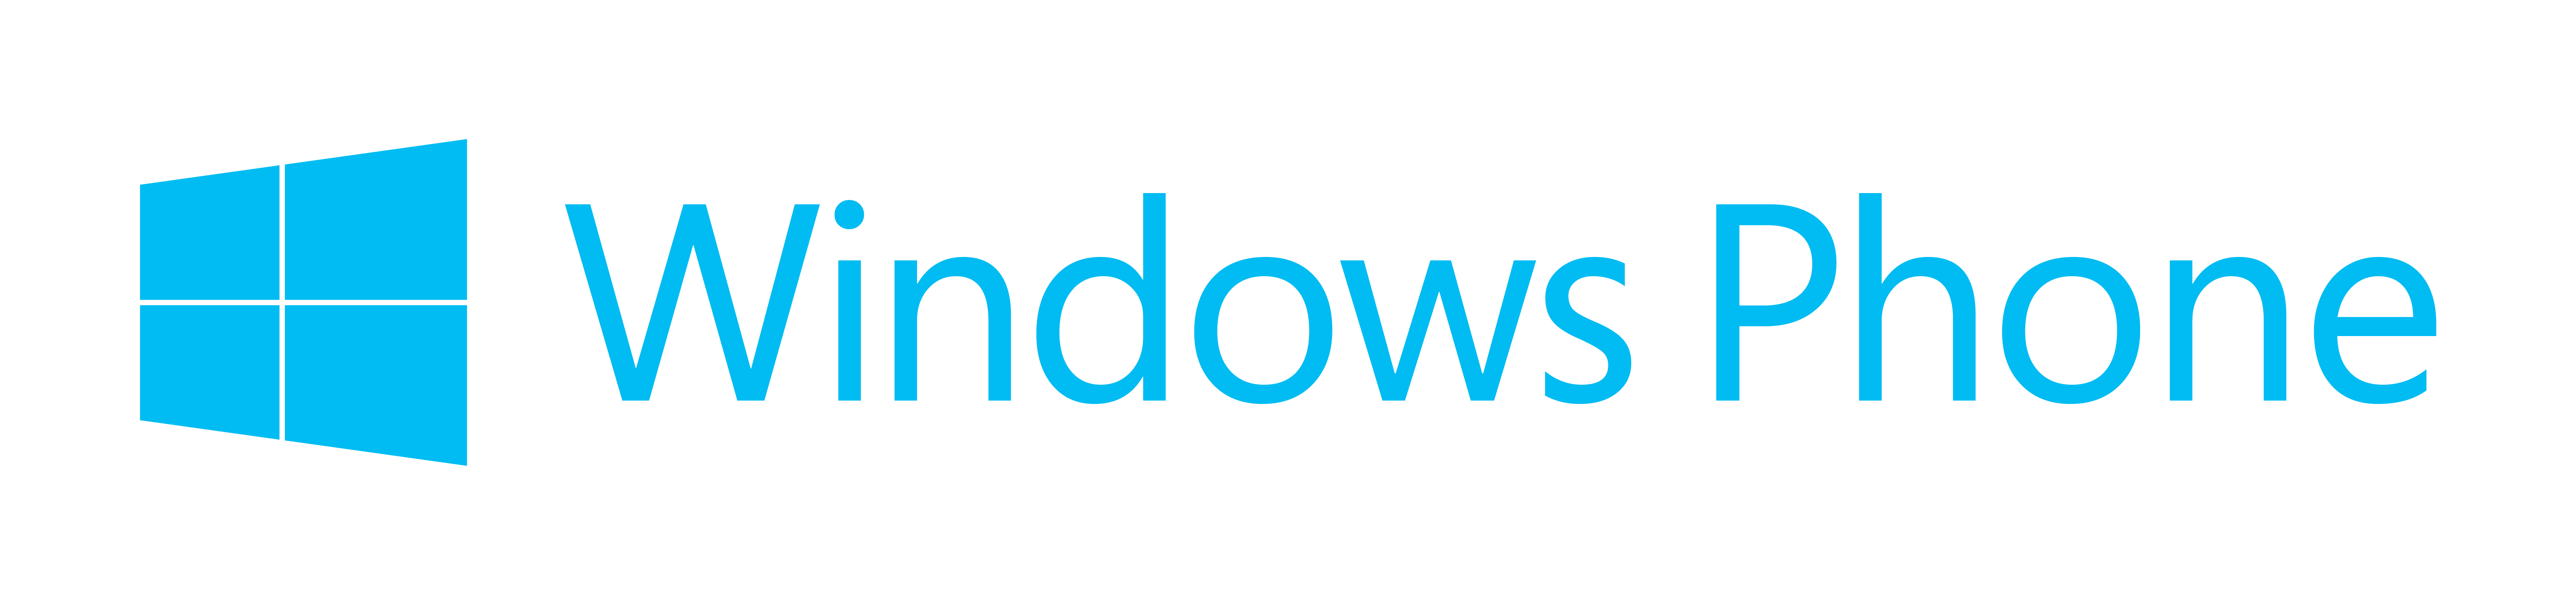 Windows Phone 7 Logo - Windows Phone App Logo Png Images